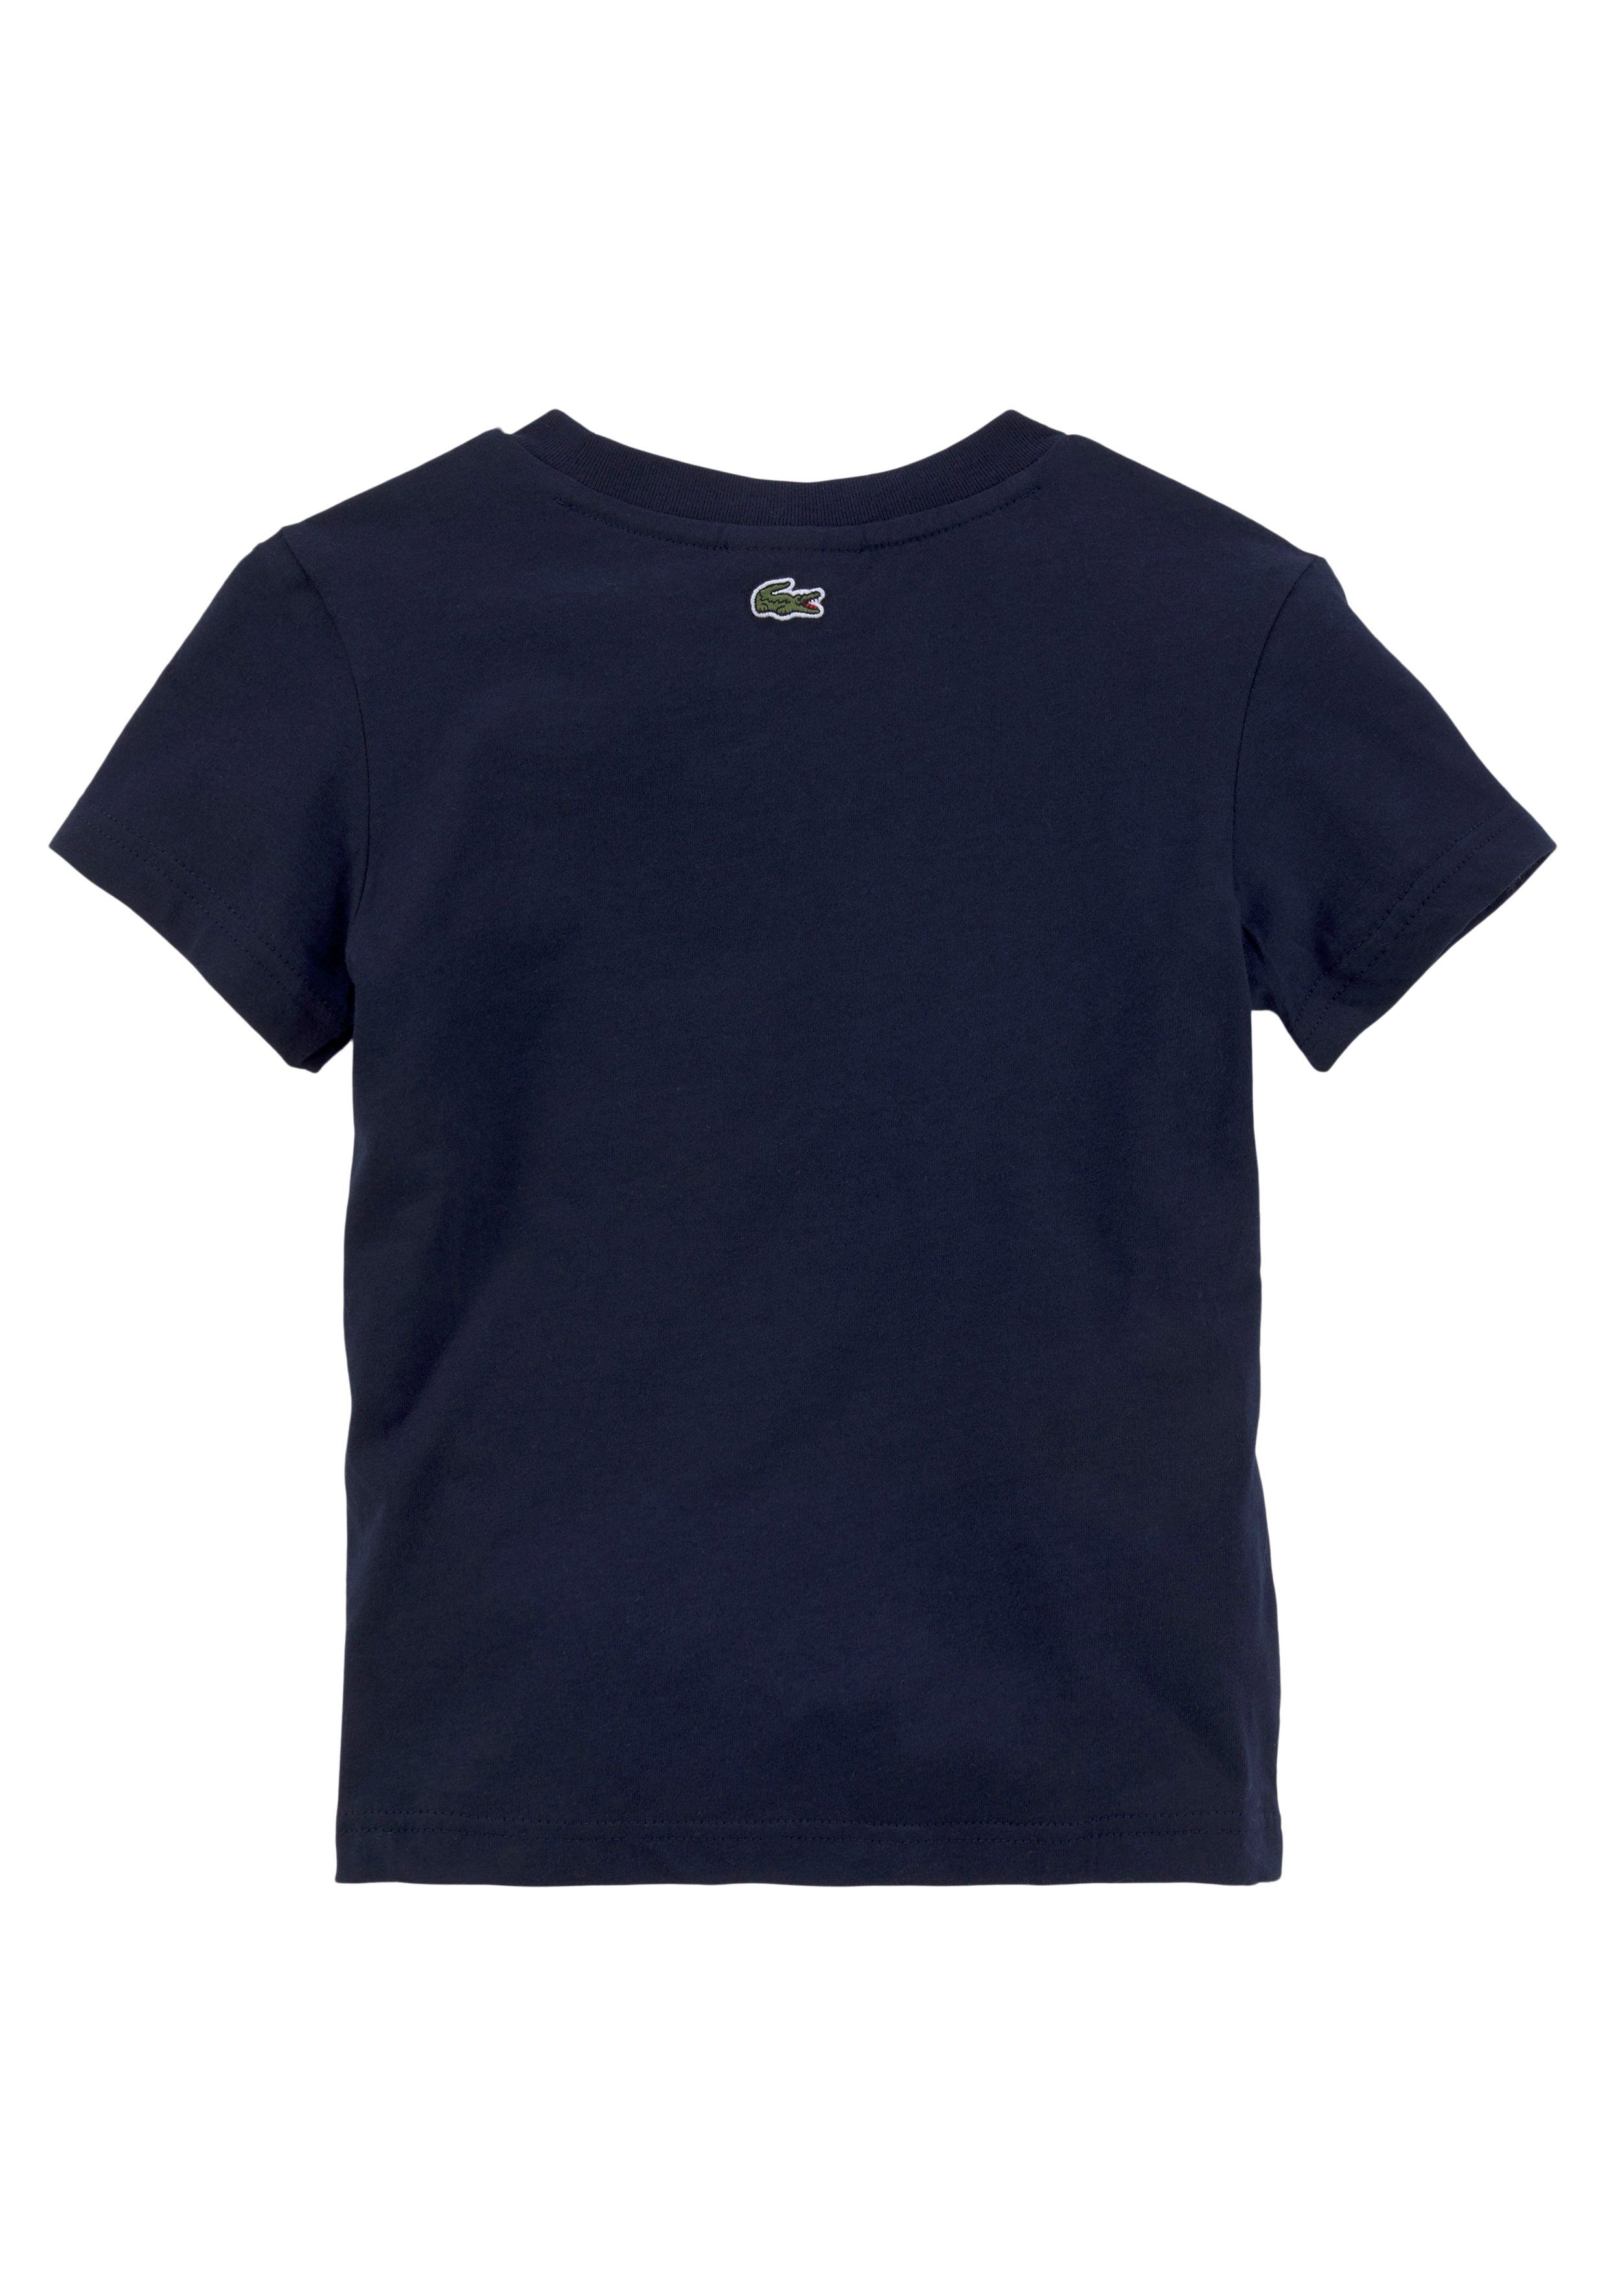 großem blue Lacoste mit Logodruck navy T-Shirt